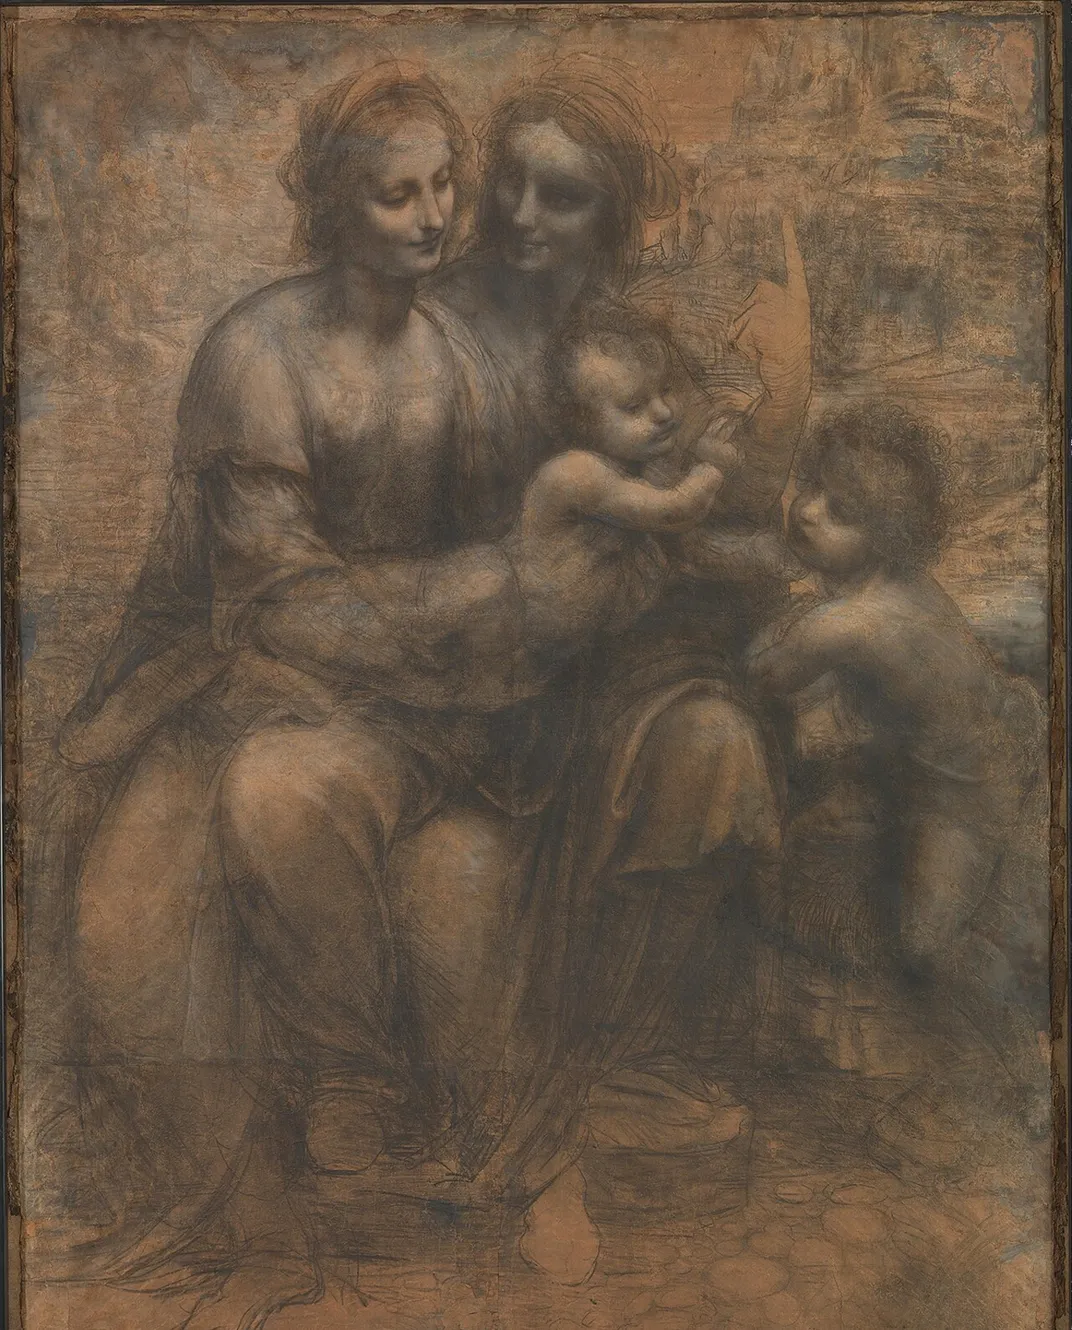 The Virgin and Child With St. Anne and St. John the Baptist, Leonardo da Vinci, 1499-1500 or 1506-1508